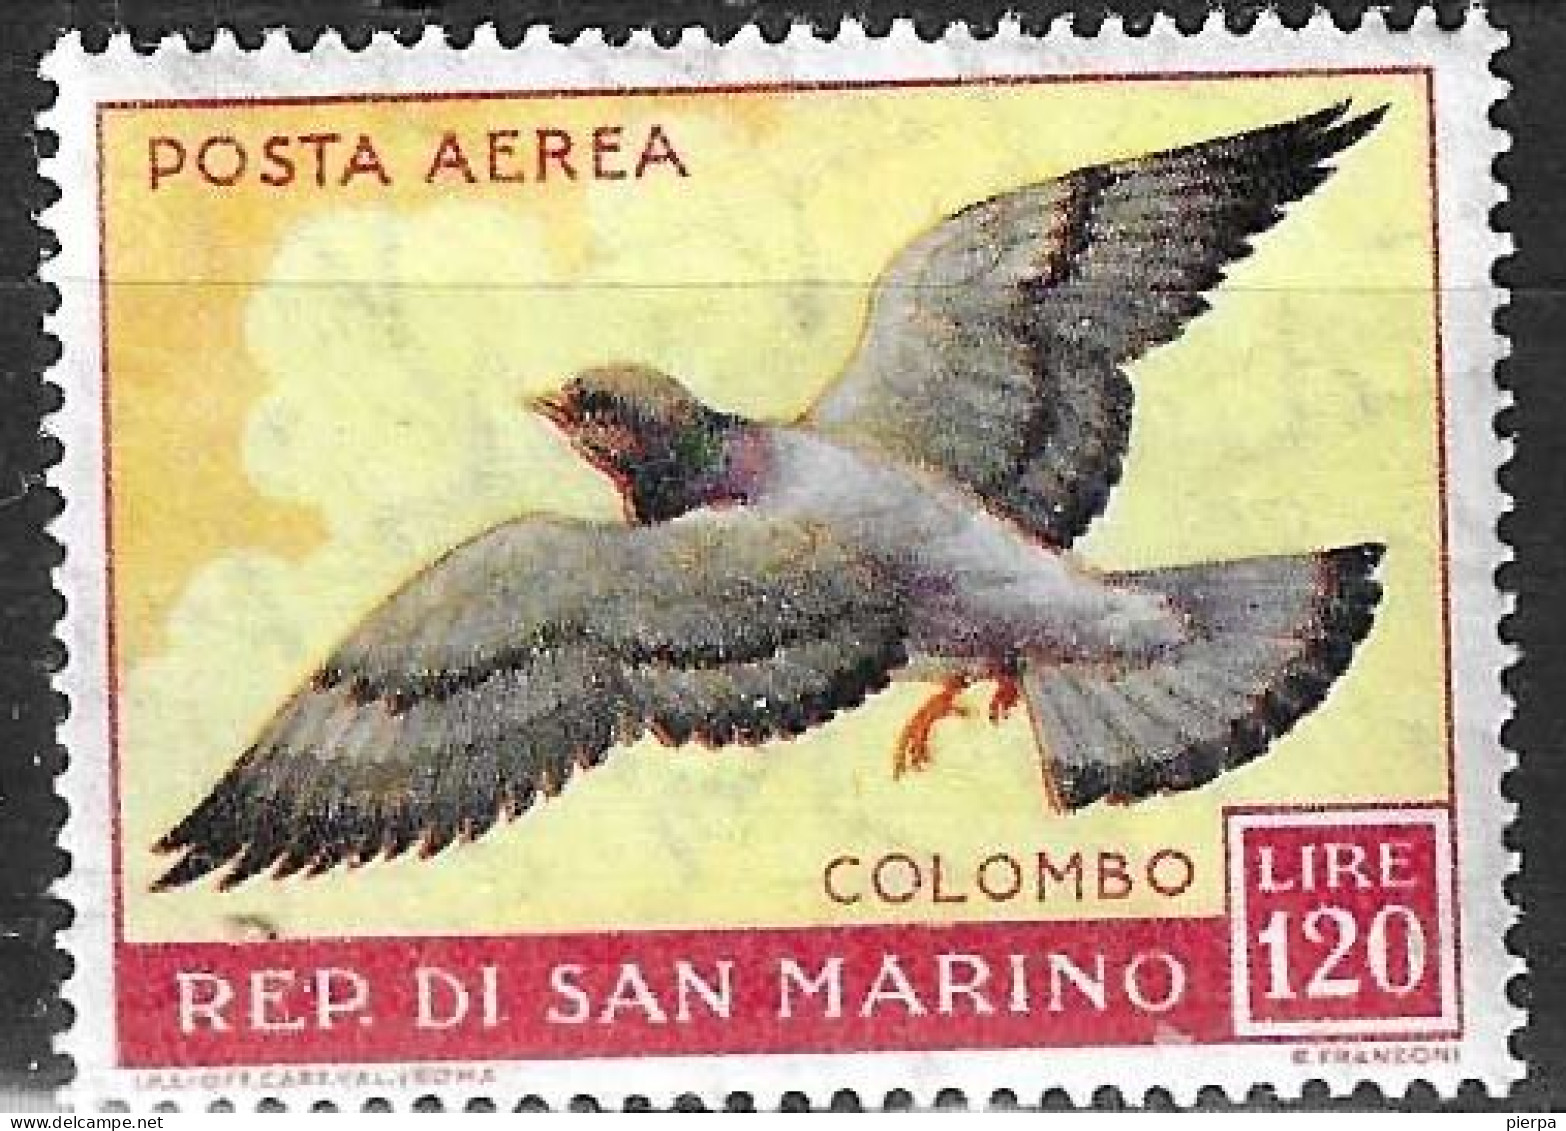 SAN MARINO -1959 - P. AEREA - COLOMBO - LIRE 120- NUOVO -MNH** ( YVERT AV 114- MICHEL 609- SS A 125) - Airmail